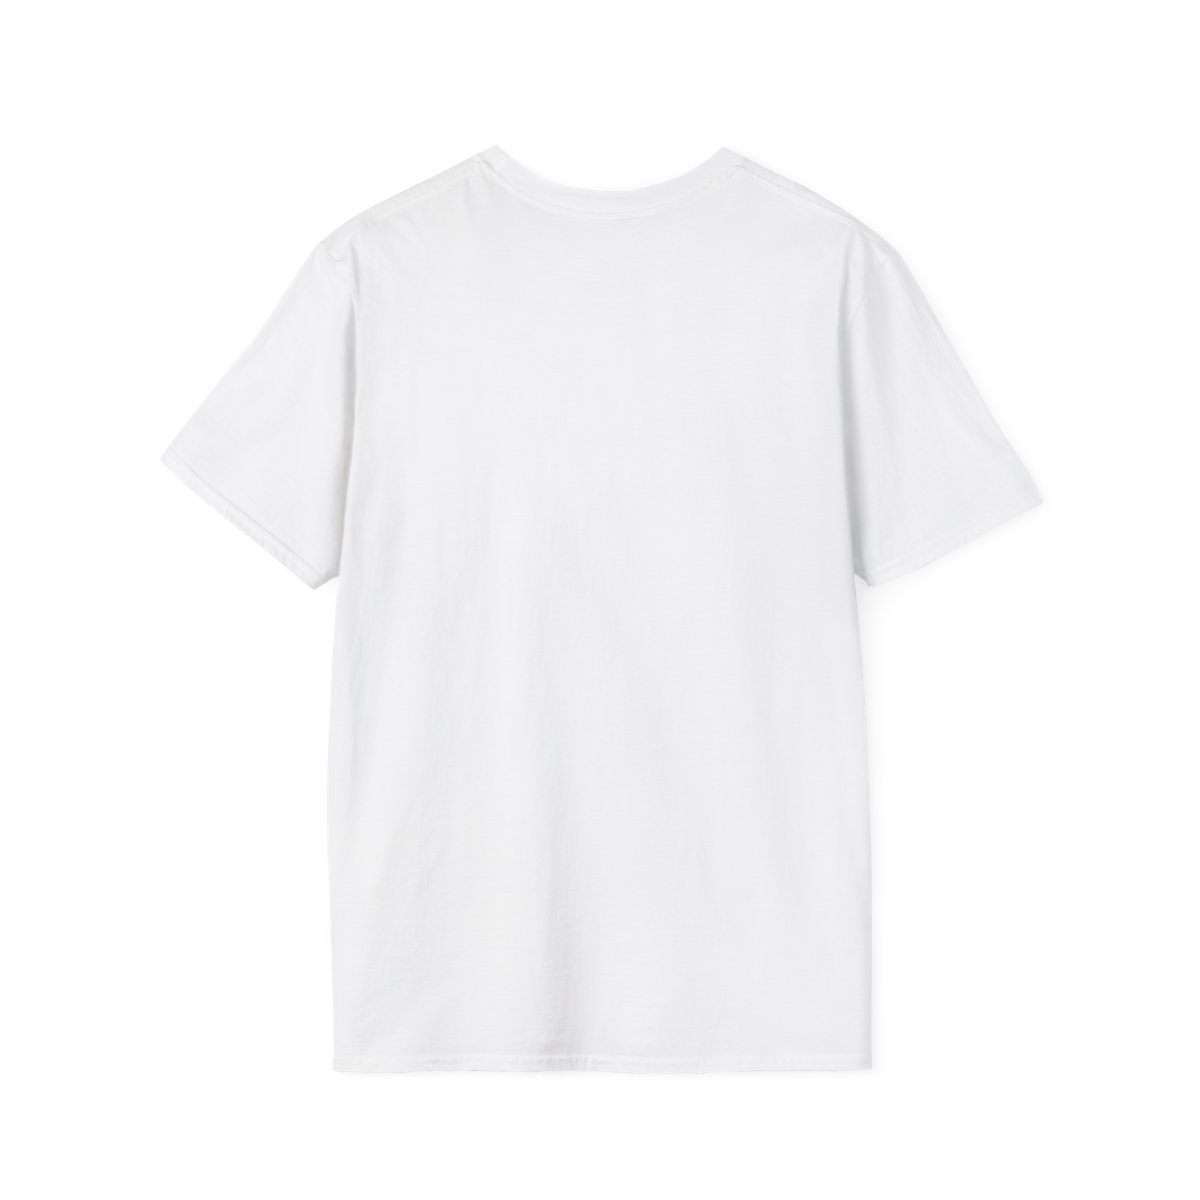 LARS 4 Pres - White/Light - T-Shirt - Unisex Softstyle product thumbnail image